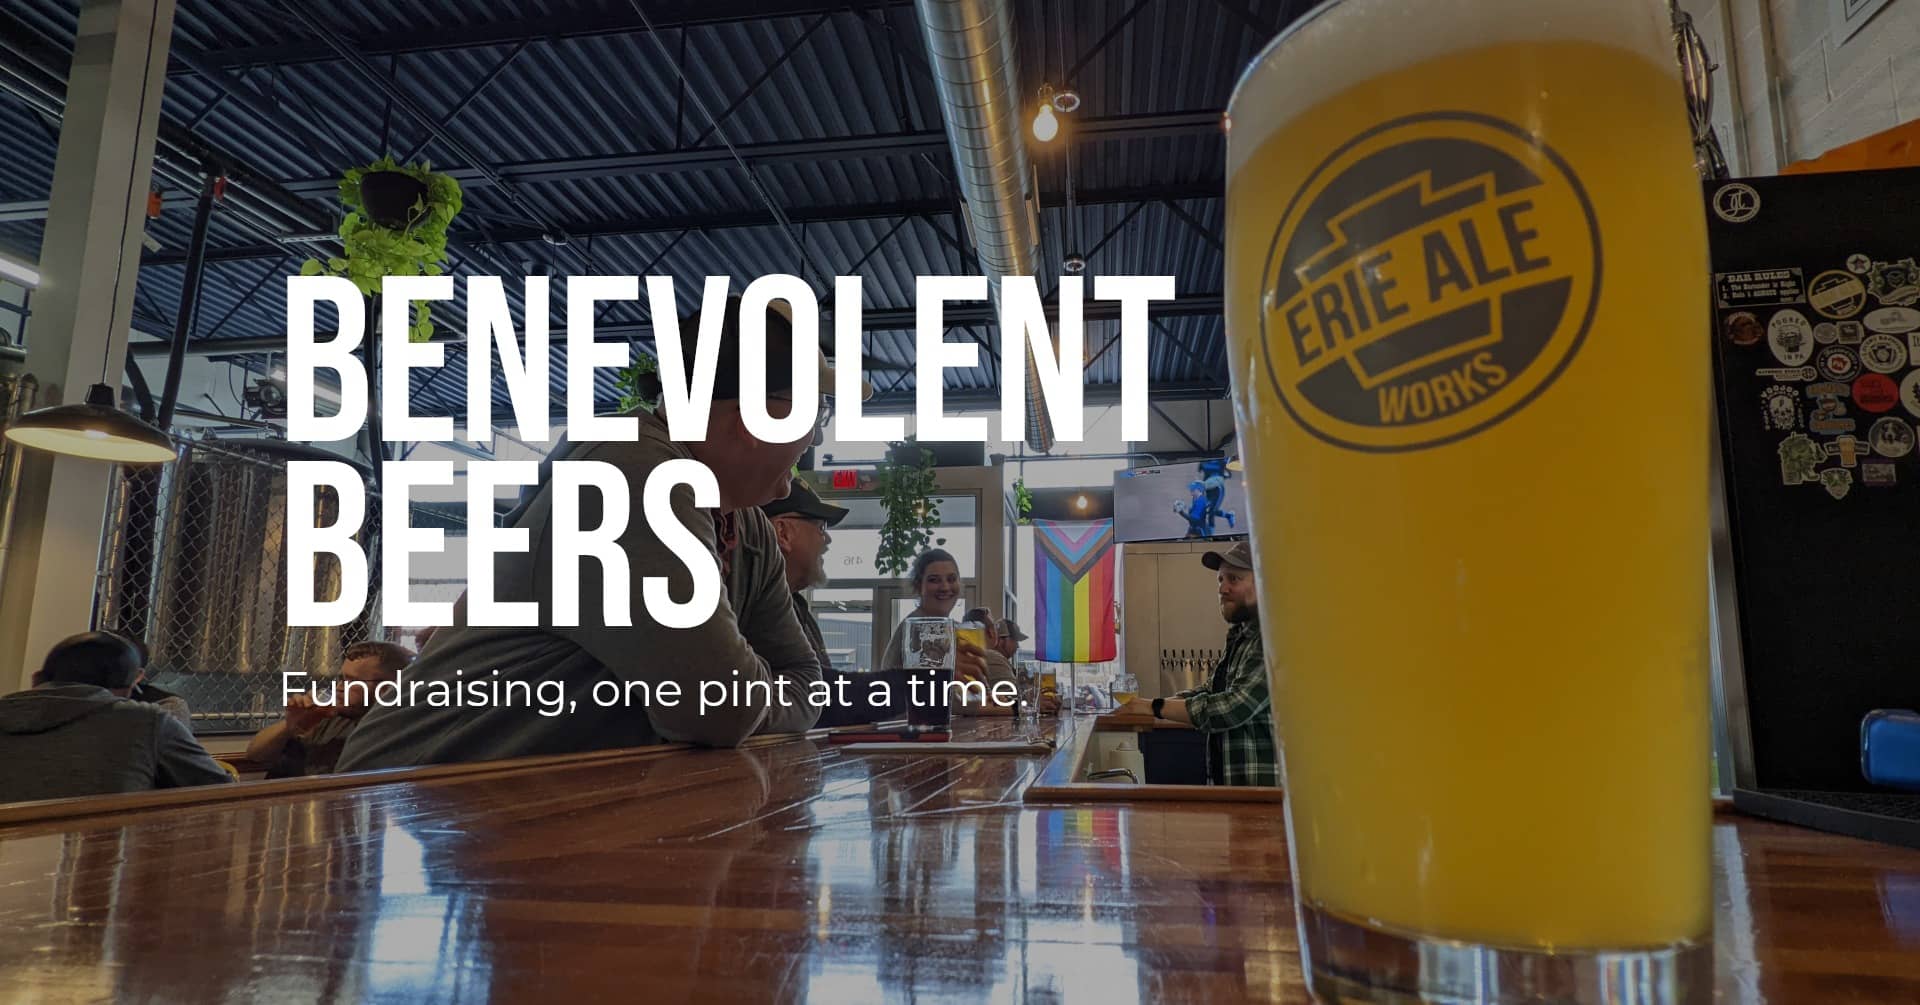 Benevolent Beers: Because You Care